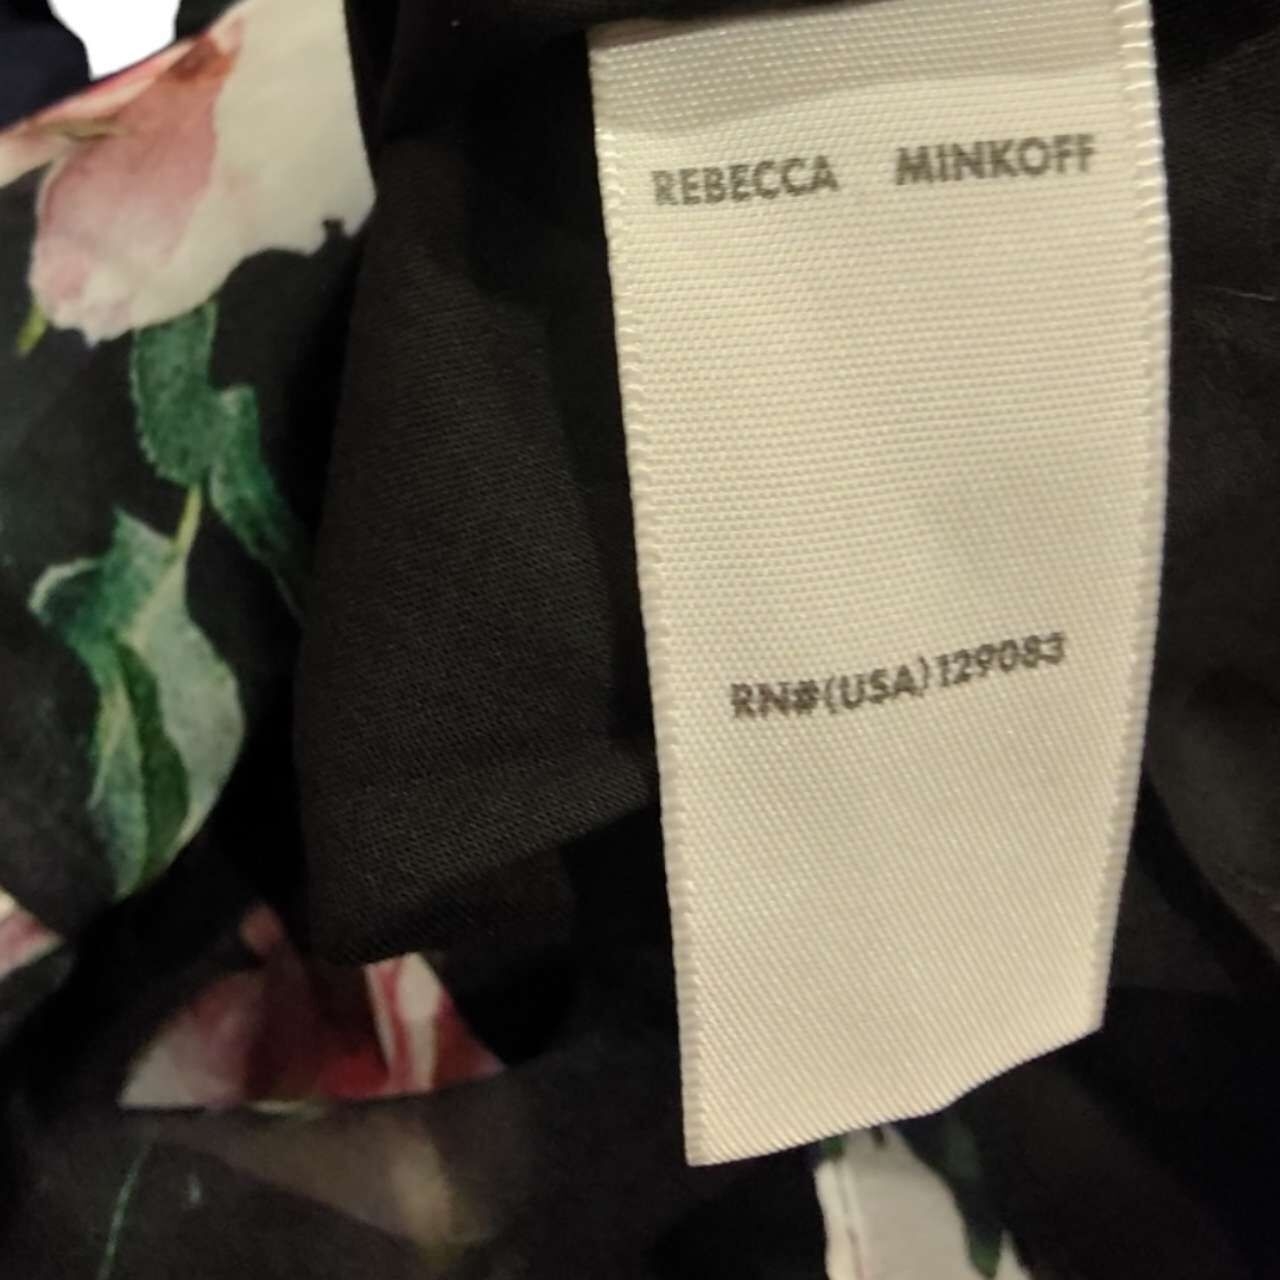 Rebecca Minkoff Floral Sleeveless Top